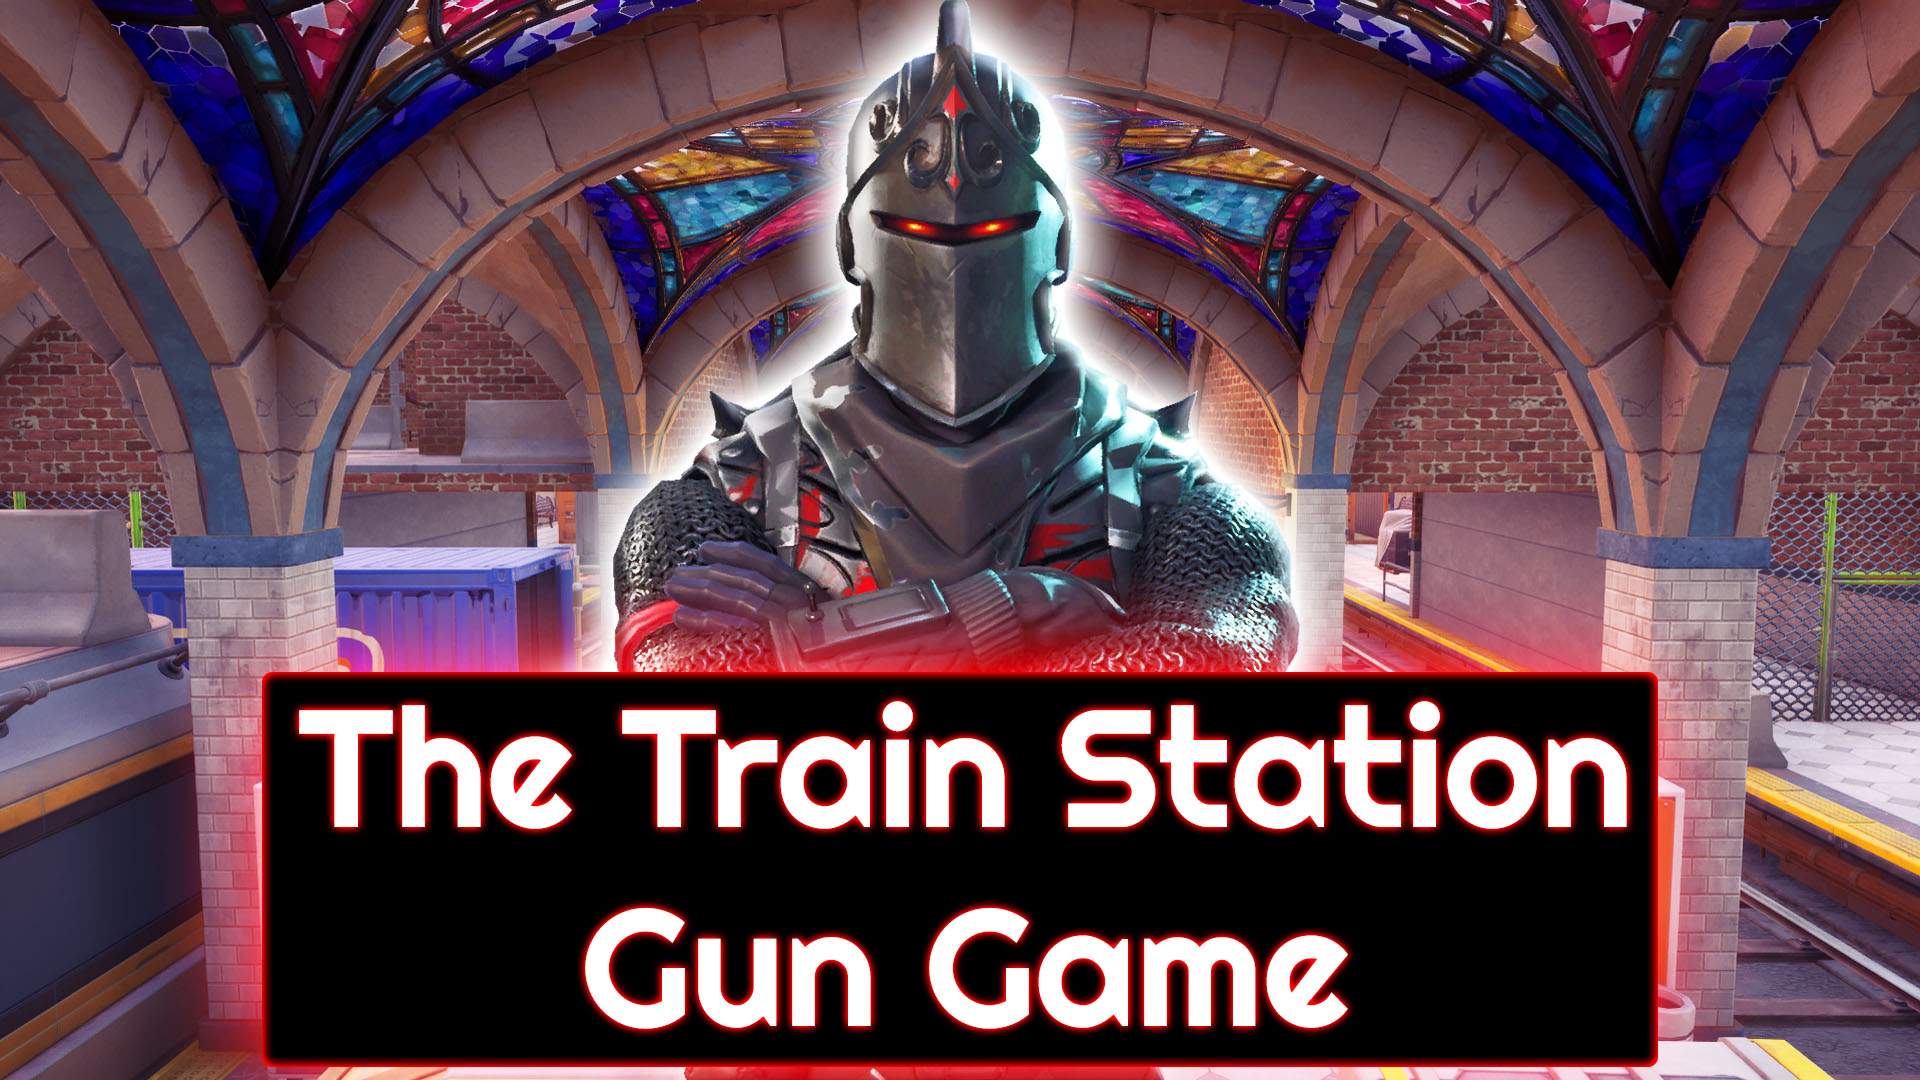 The Train Station Gun Game